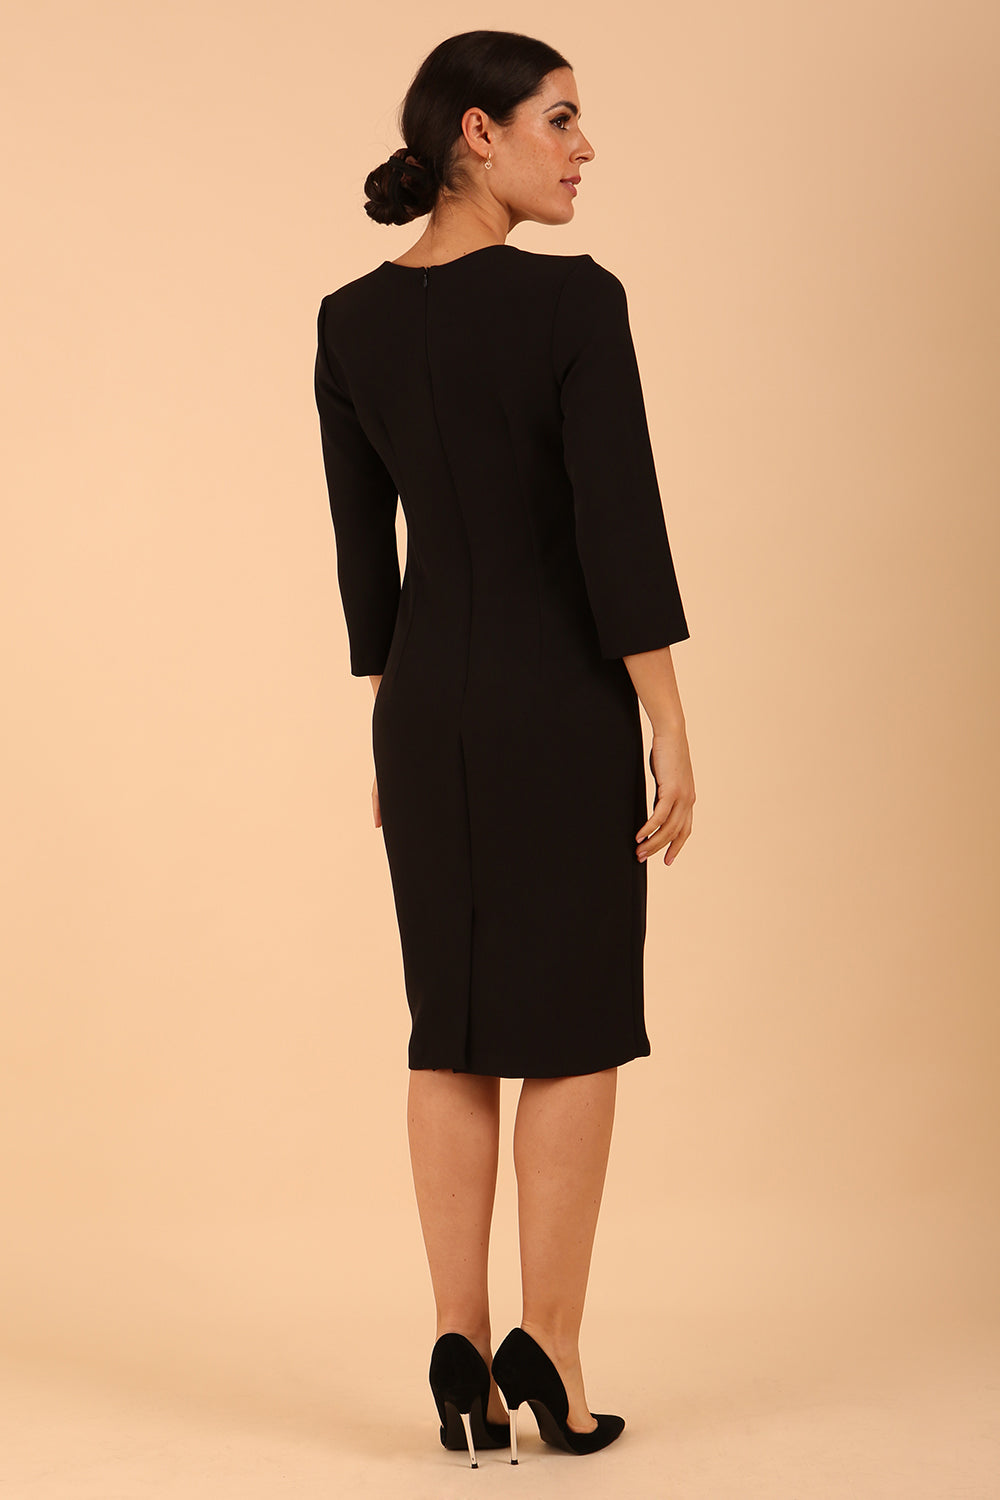 Model wearing back diva catwalk Elsinor 3/4 Sleeve pencil skirt dress with two side pockets in black